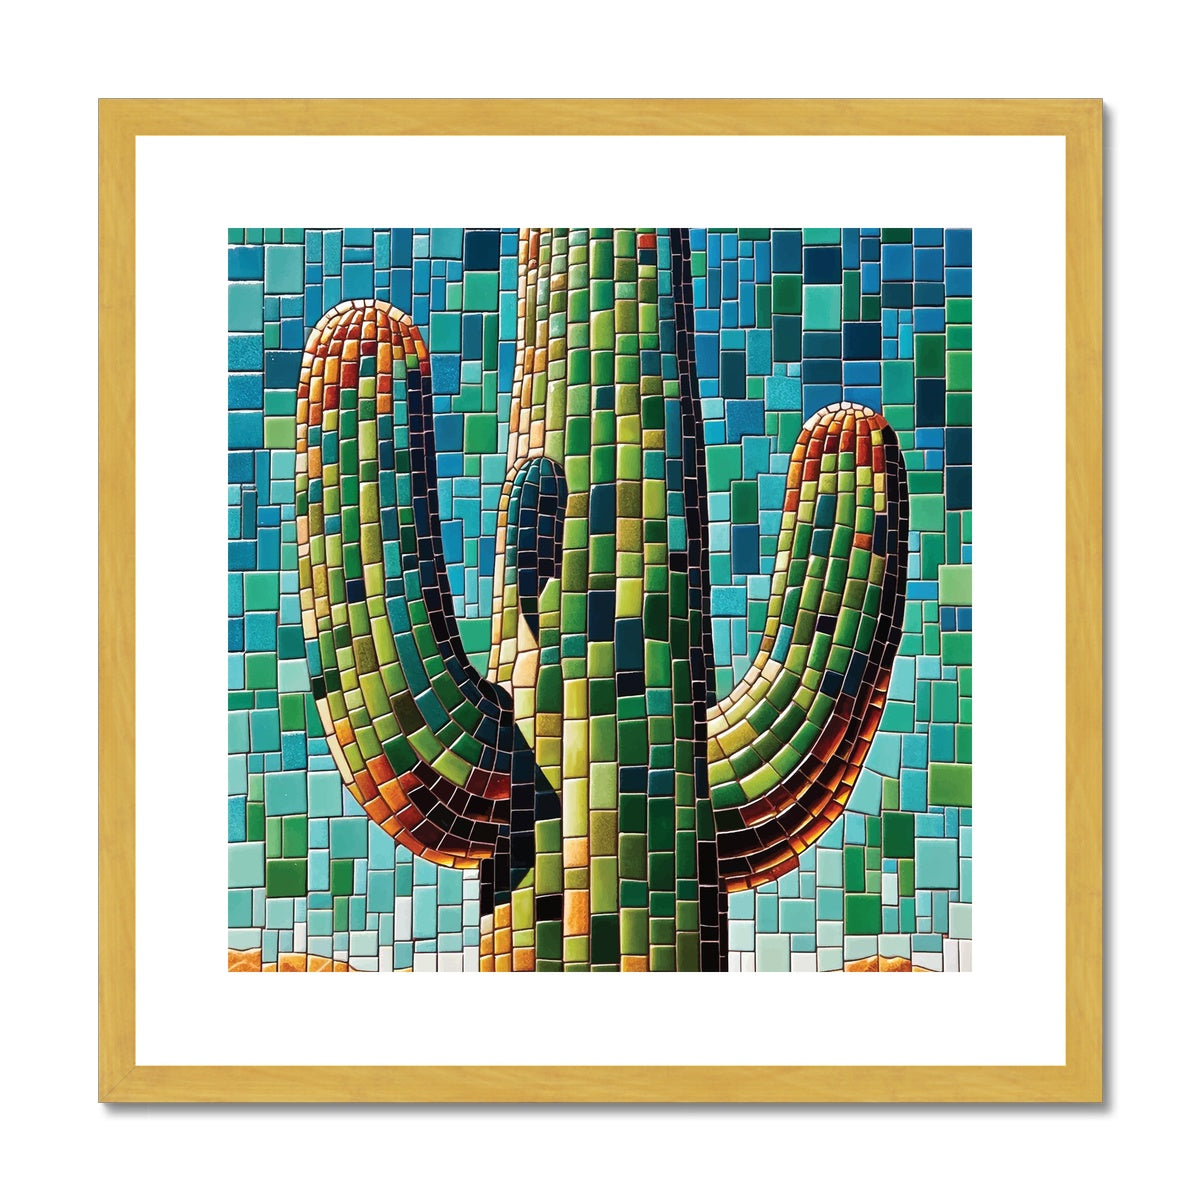 Saguaro Cactus Mosaic Antique Framed & Mounted Print